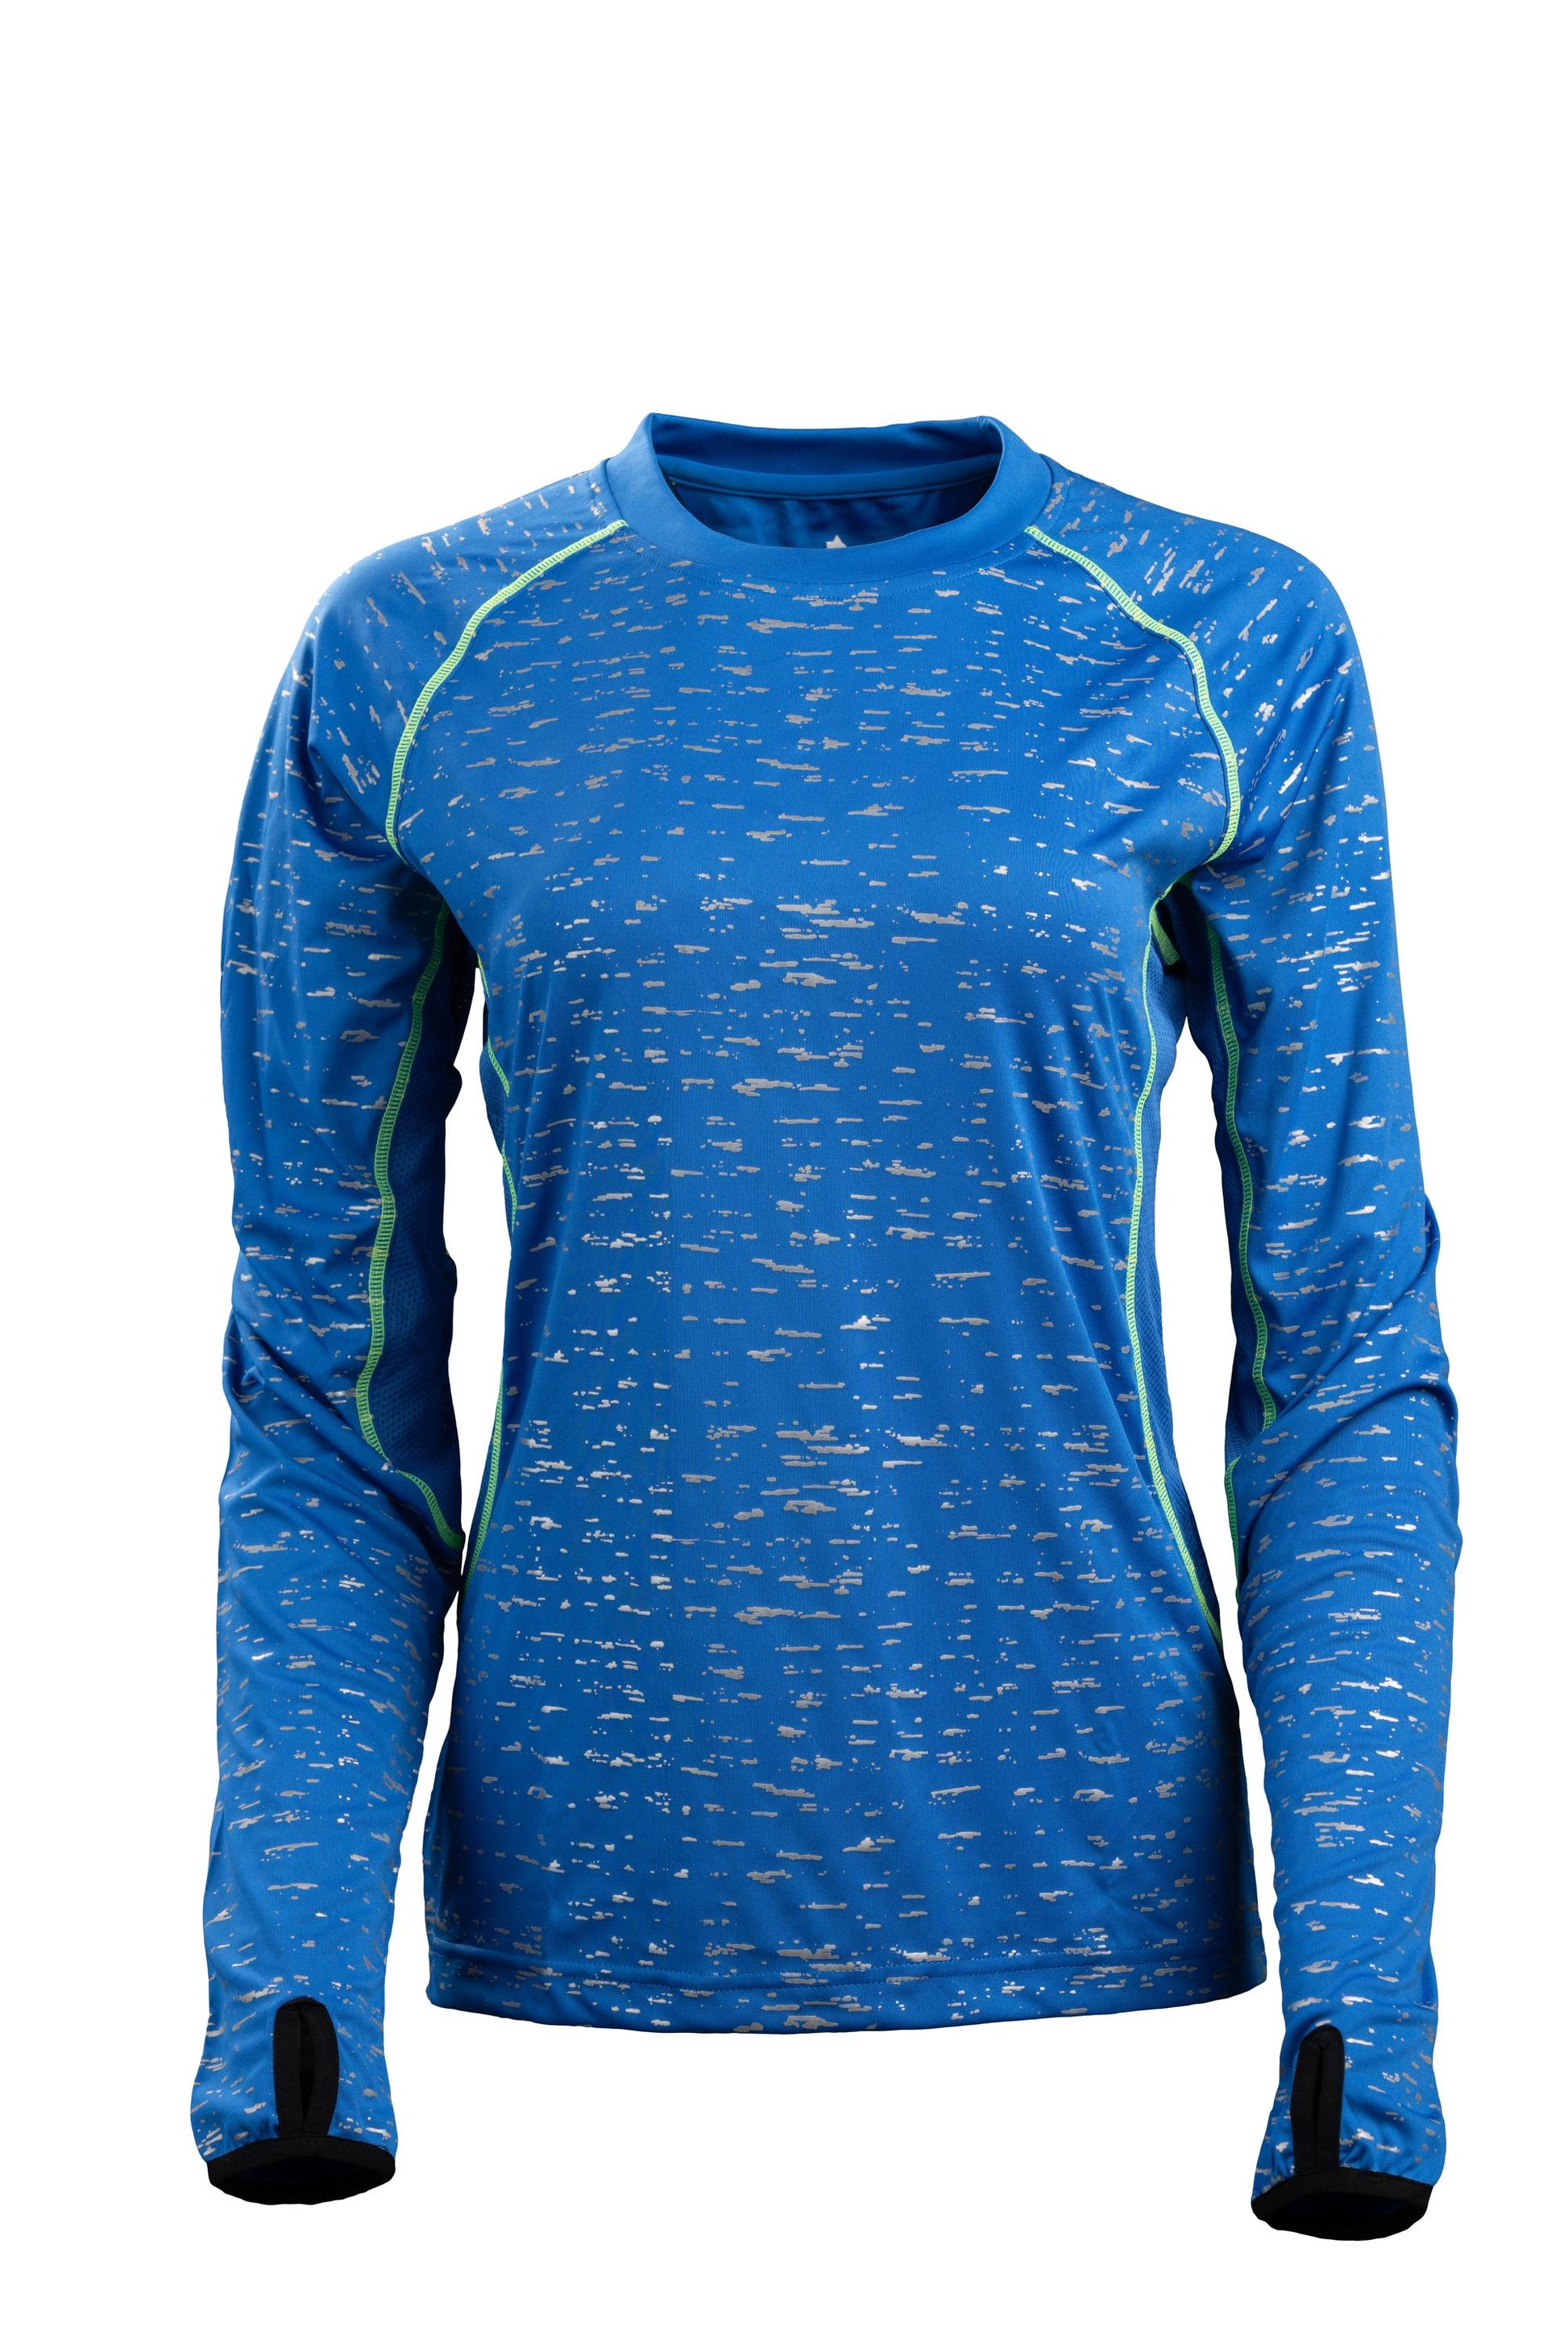 Women's Blue Long Sleeve WildSpark™ Athletic Shirt – Reflective